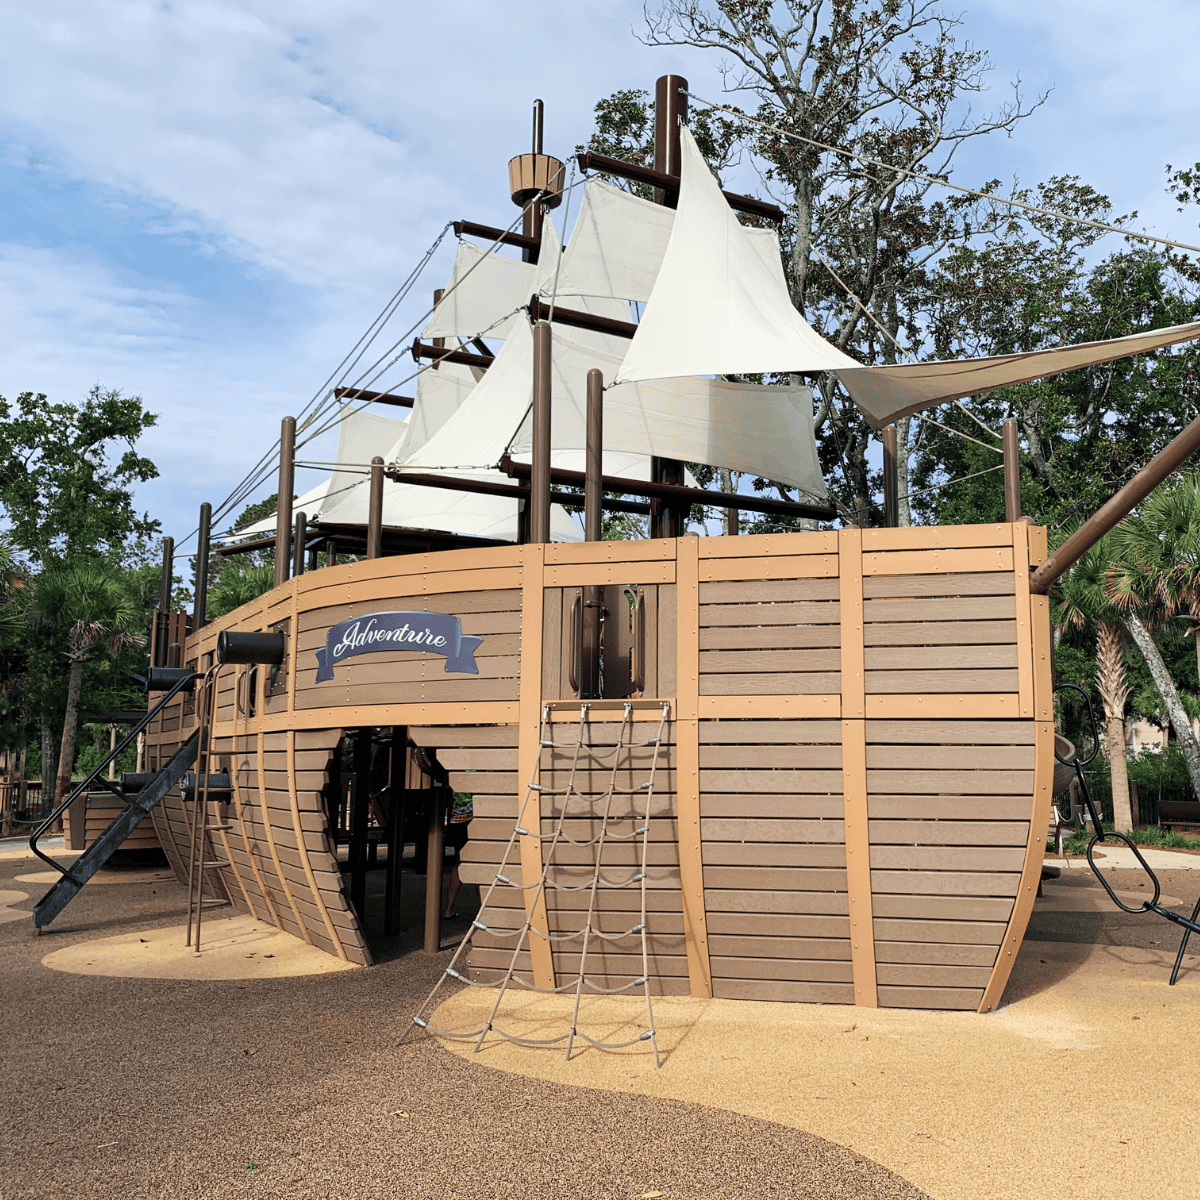 Photograph of Adventure Playground at Lowcountry Celebration Park, Hilton Head Island, South Carolina.